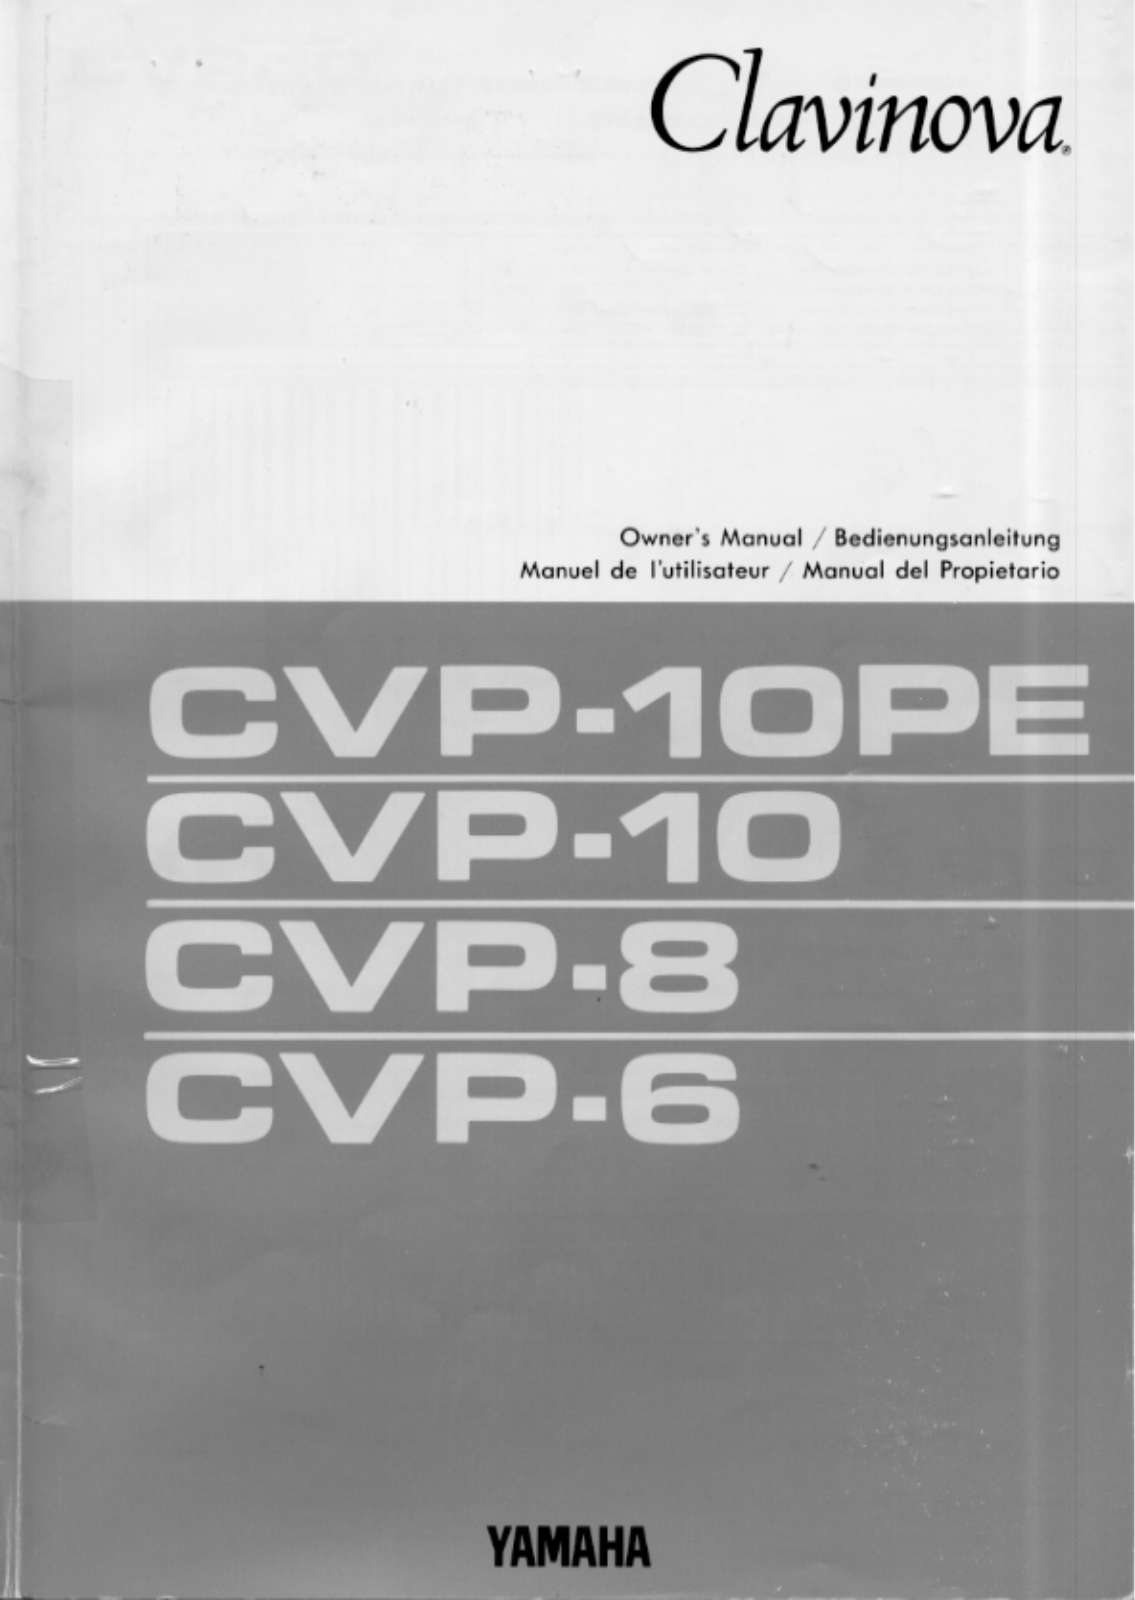 Yamaha CVP-10PE, CVP-10, CVP-8, CVP-6 User Manual